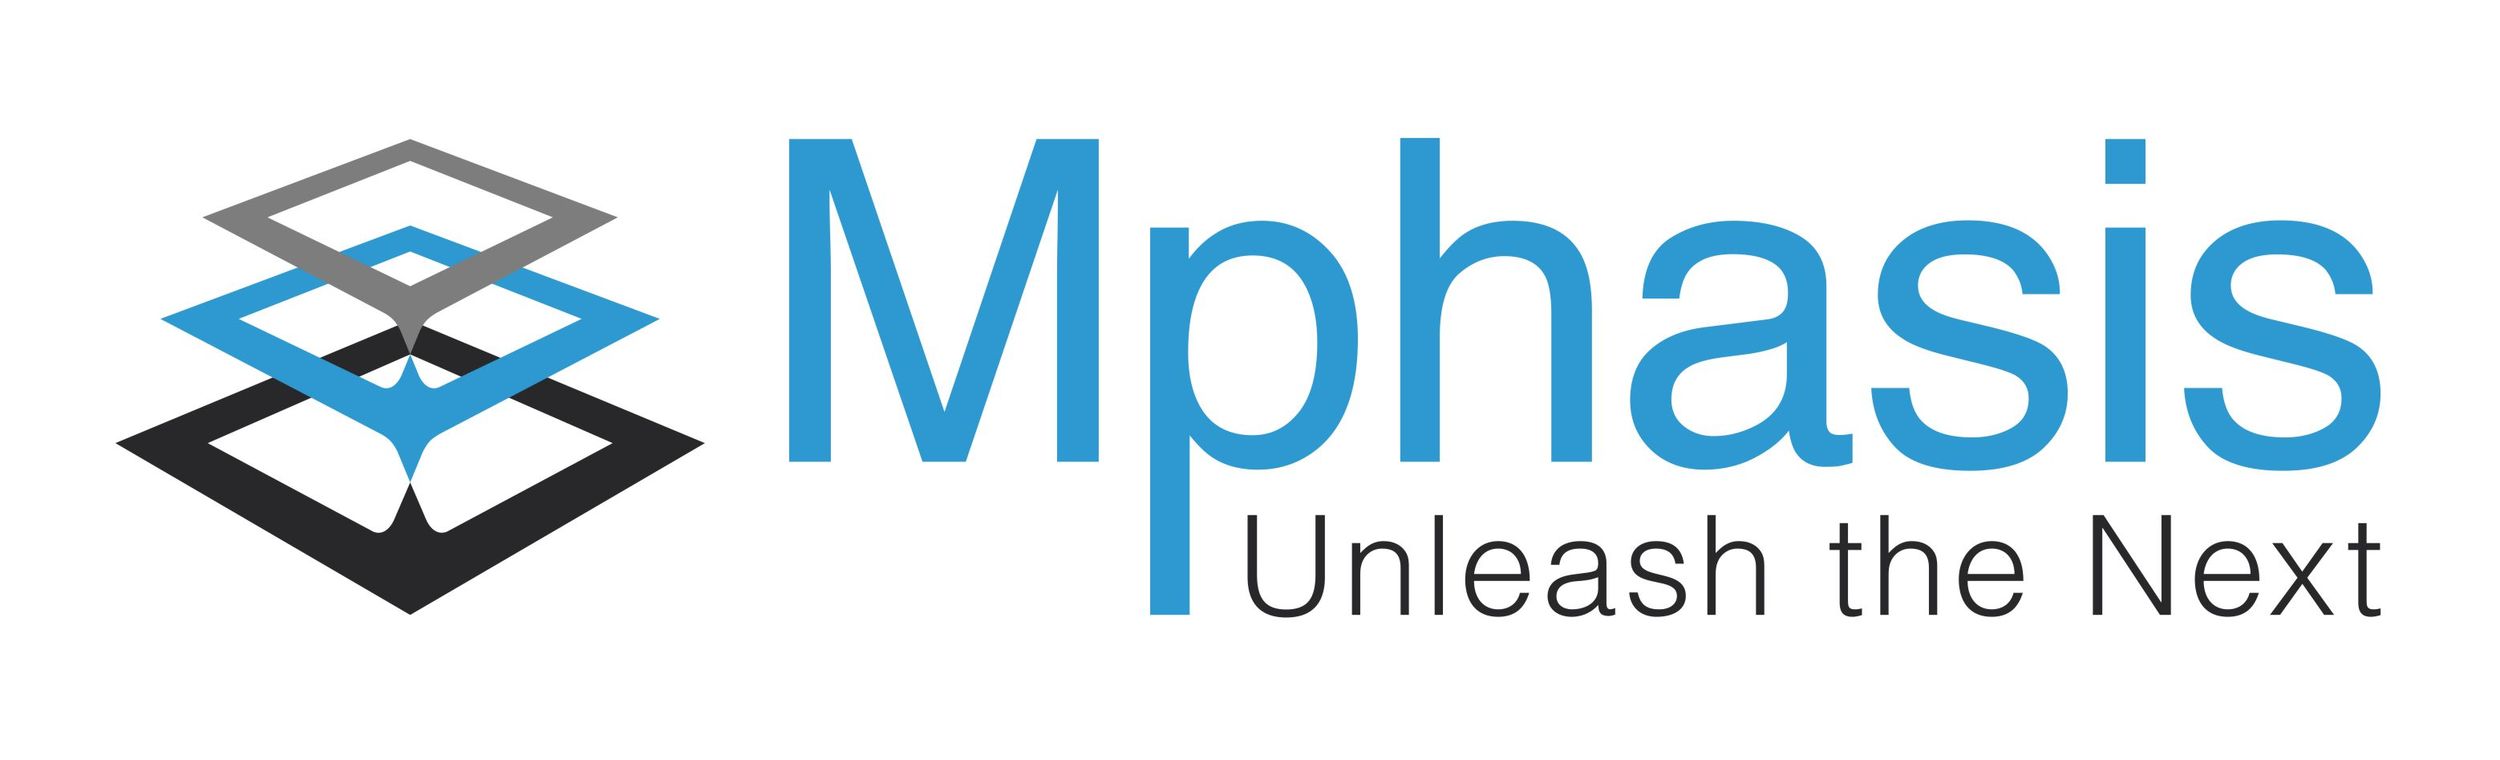 Mphasis-Logo-w-Tagline-Color.jpg